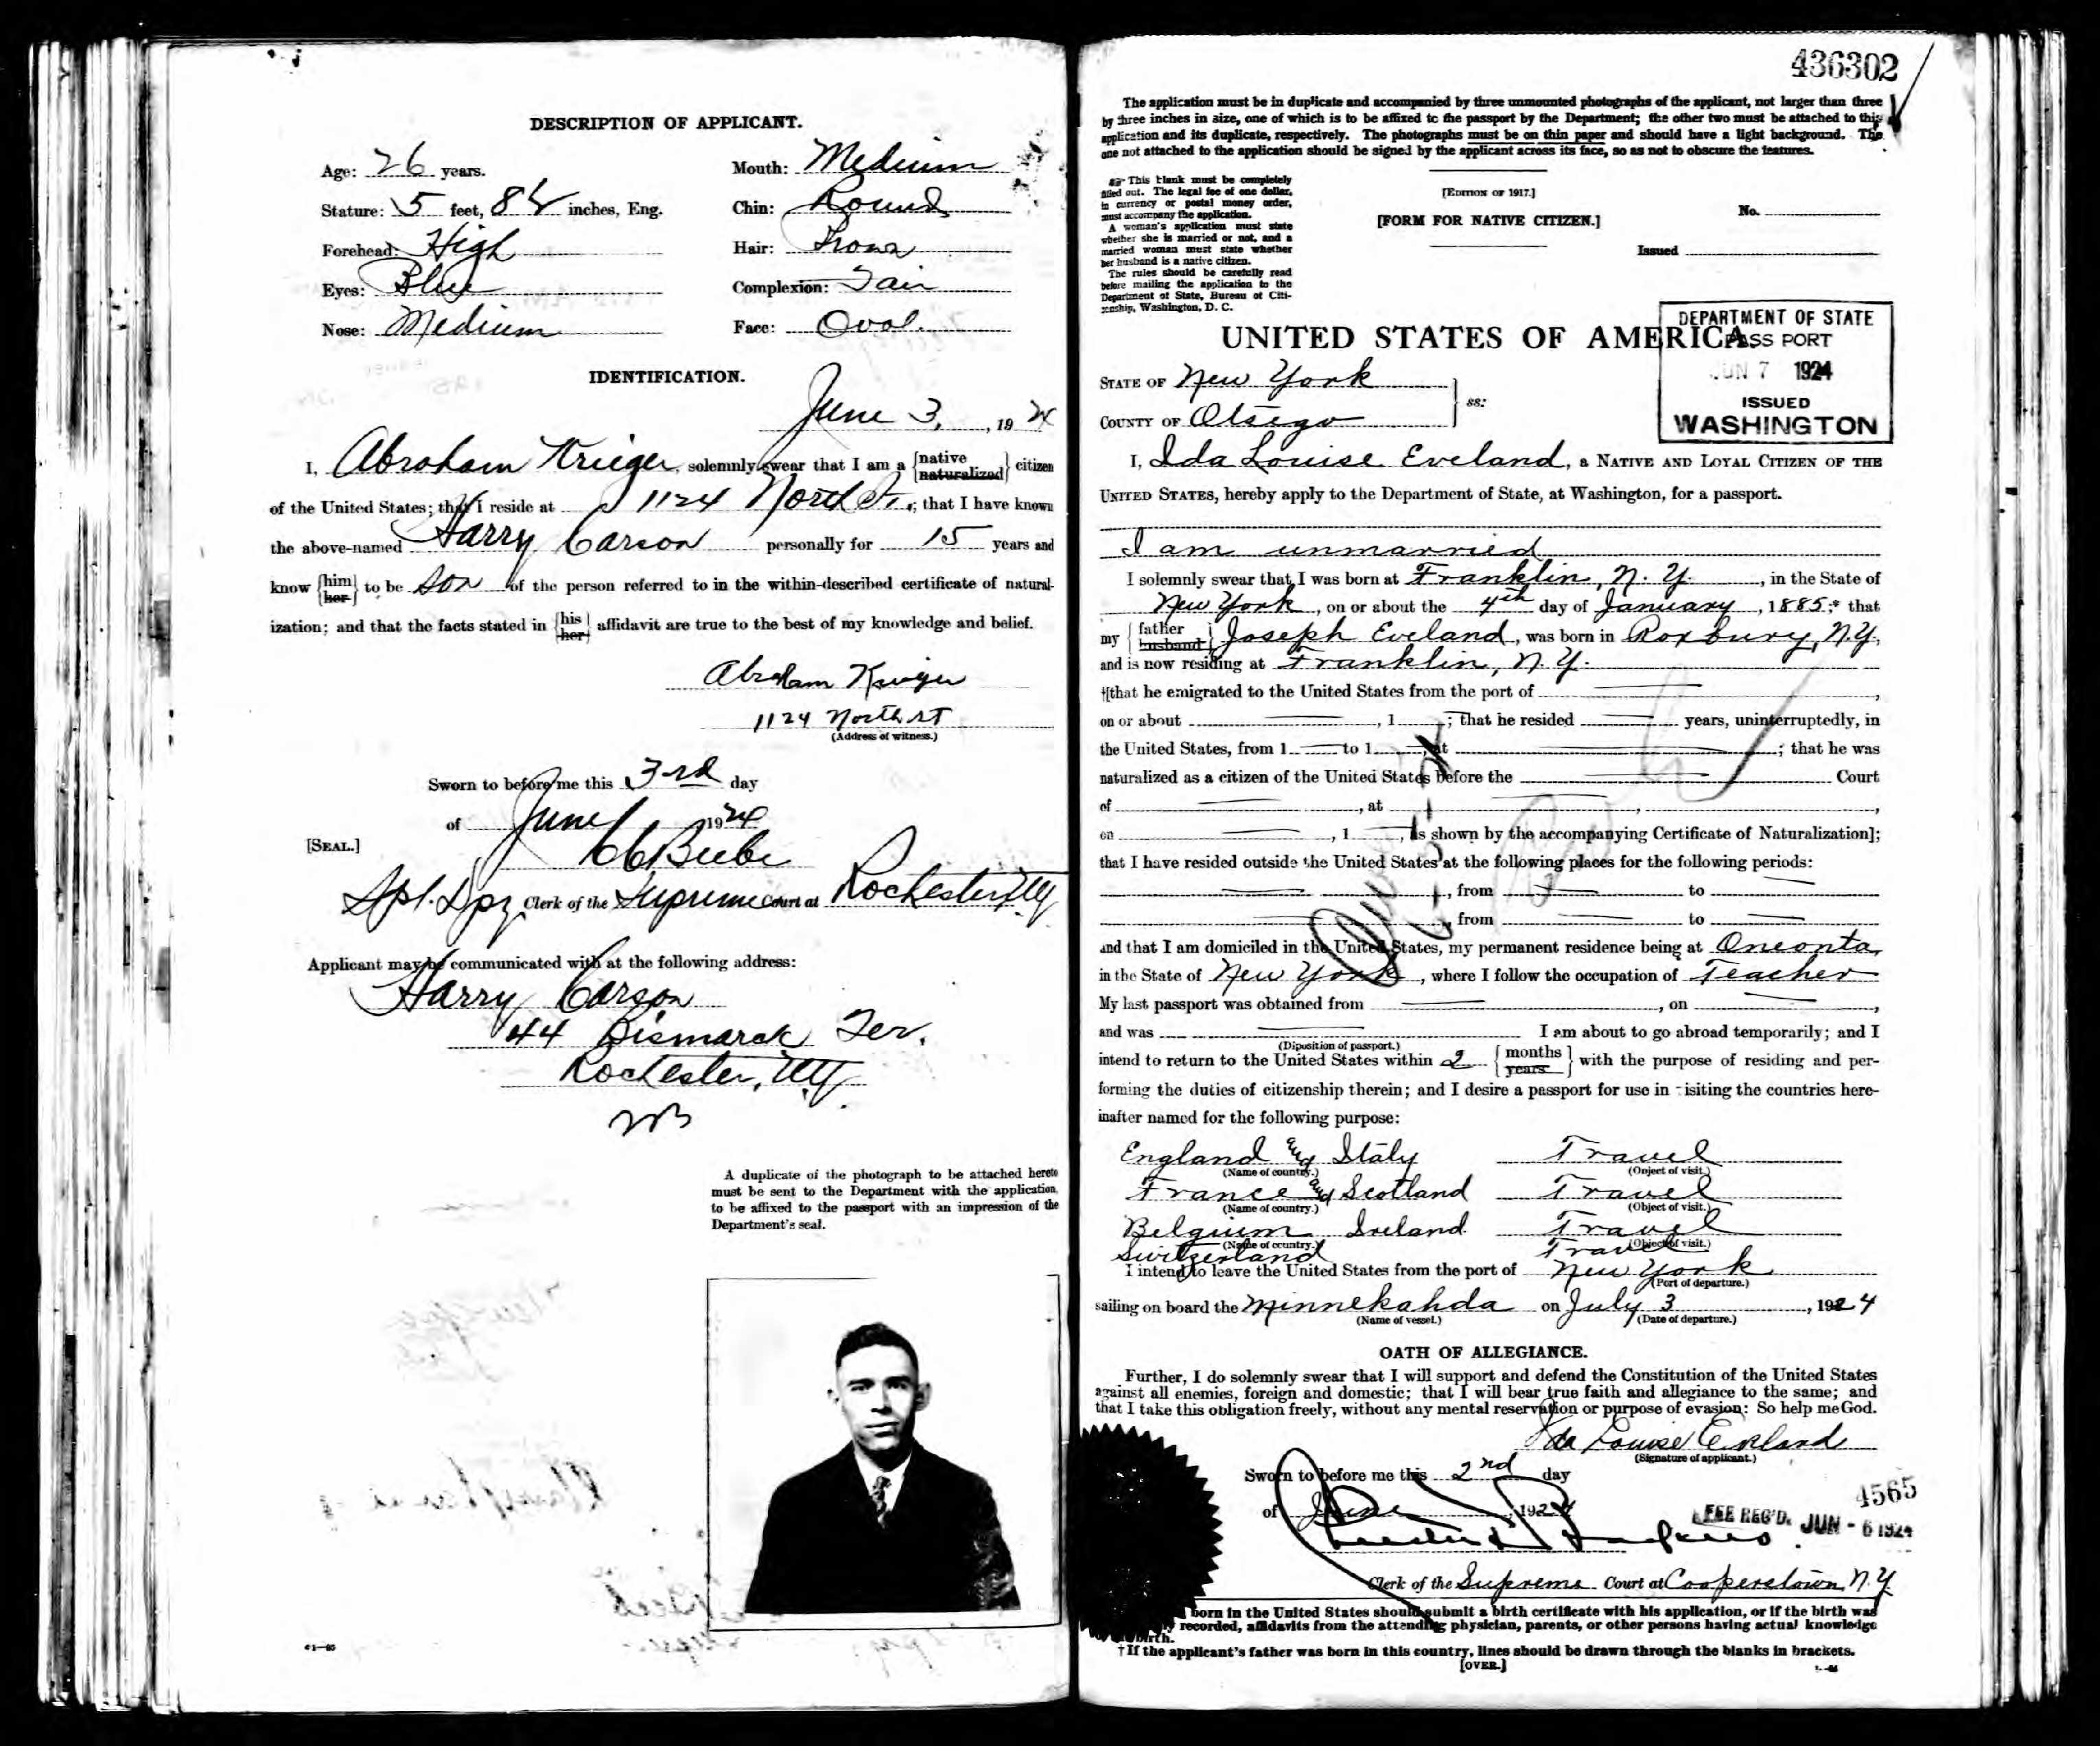 Harry Carson's Passport Application, 1924